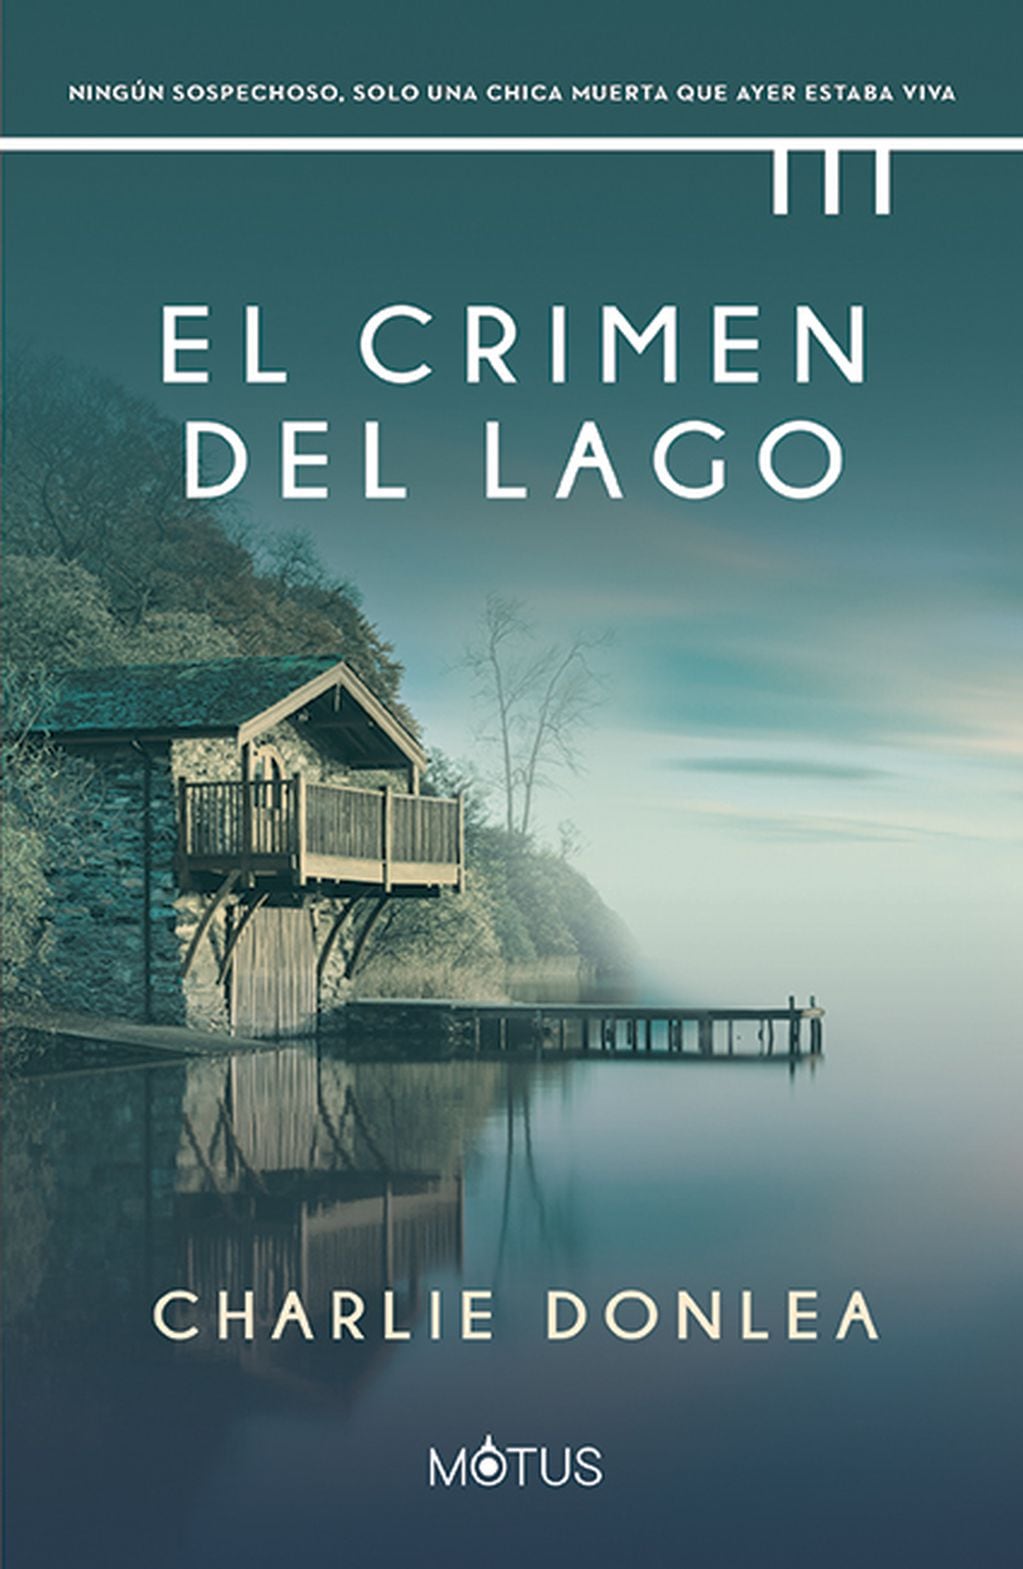 El crimen del lago, de Charlie Donlea.